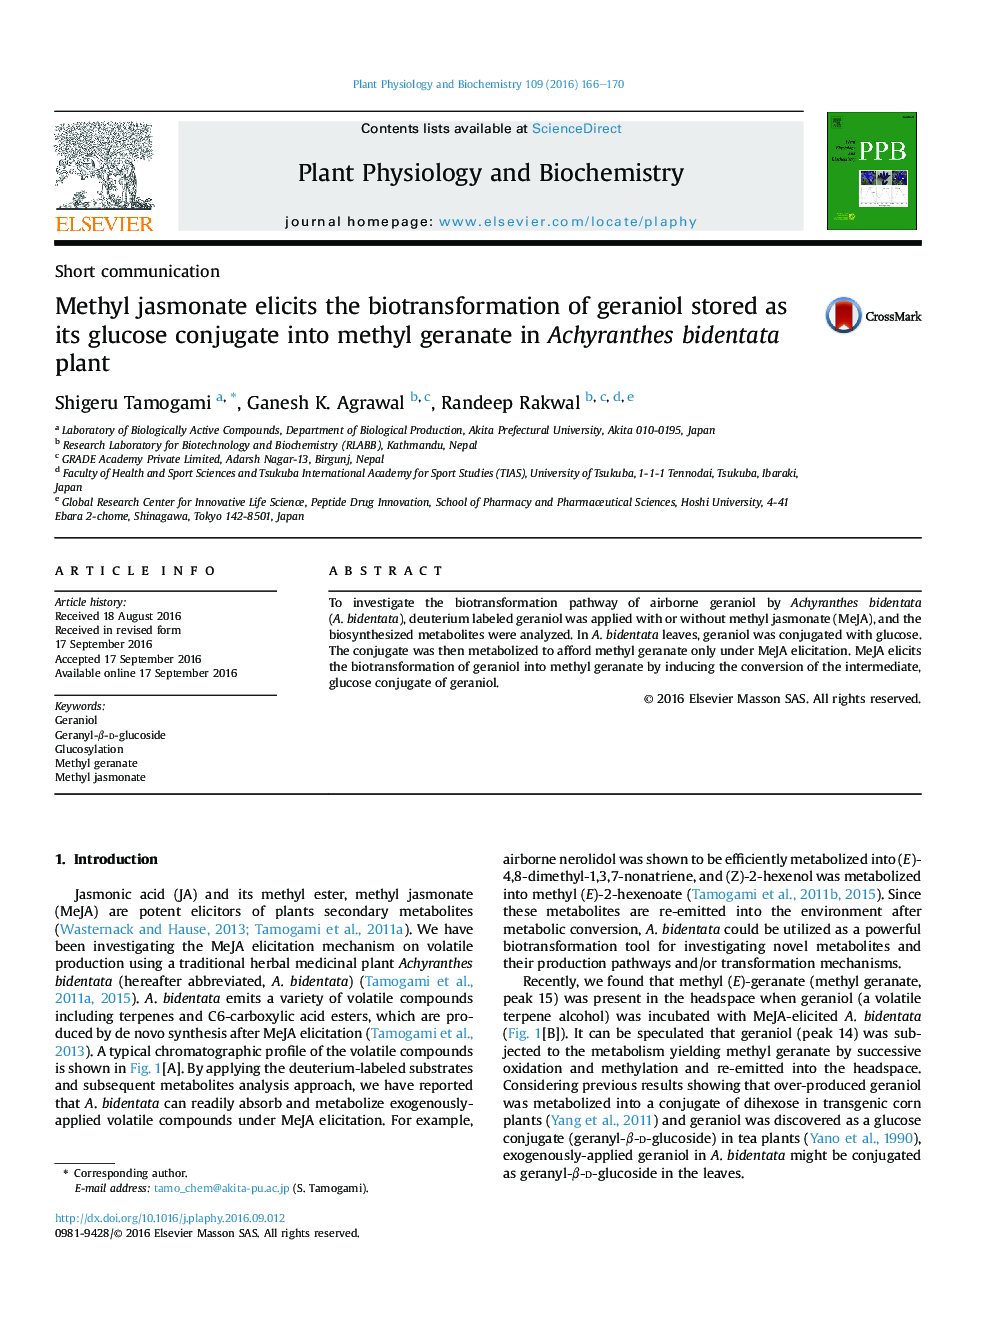 Short communicationMethyl jasmonate elicits the biotransformation of geraniol stored as its glucose conjugate into methyl geranate in Achyranthes bidentata plant